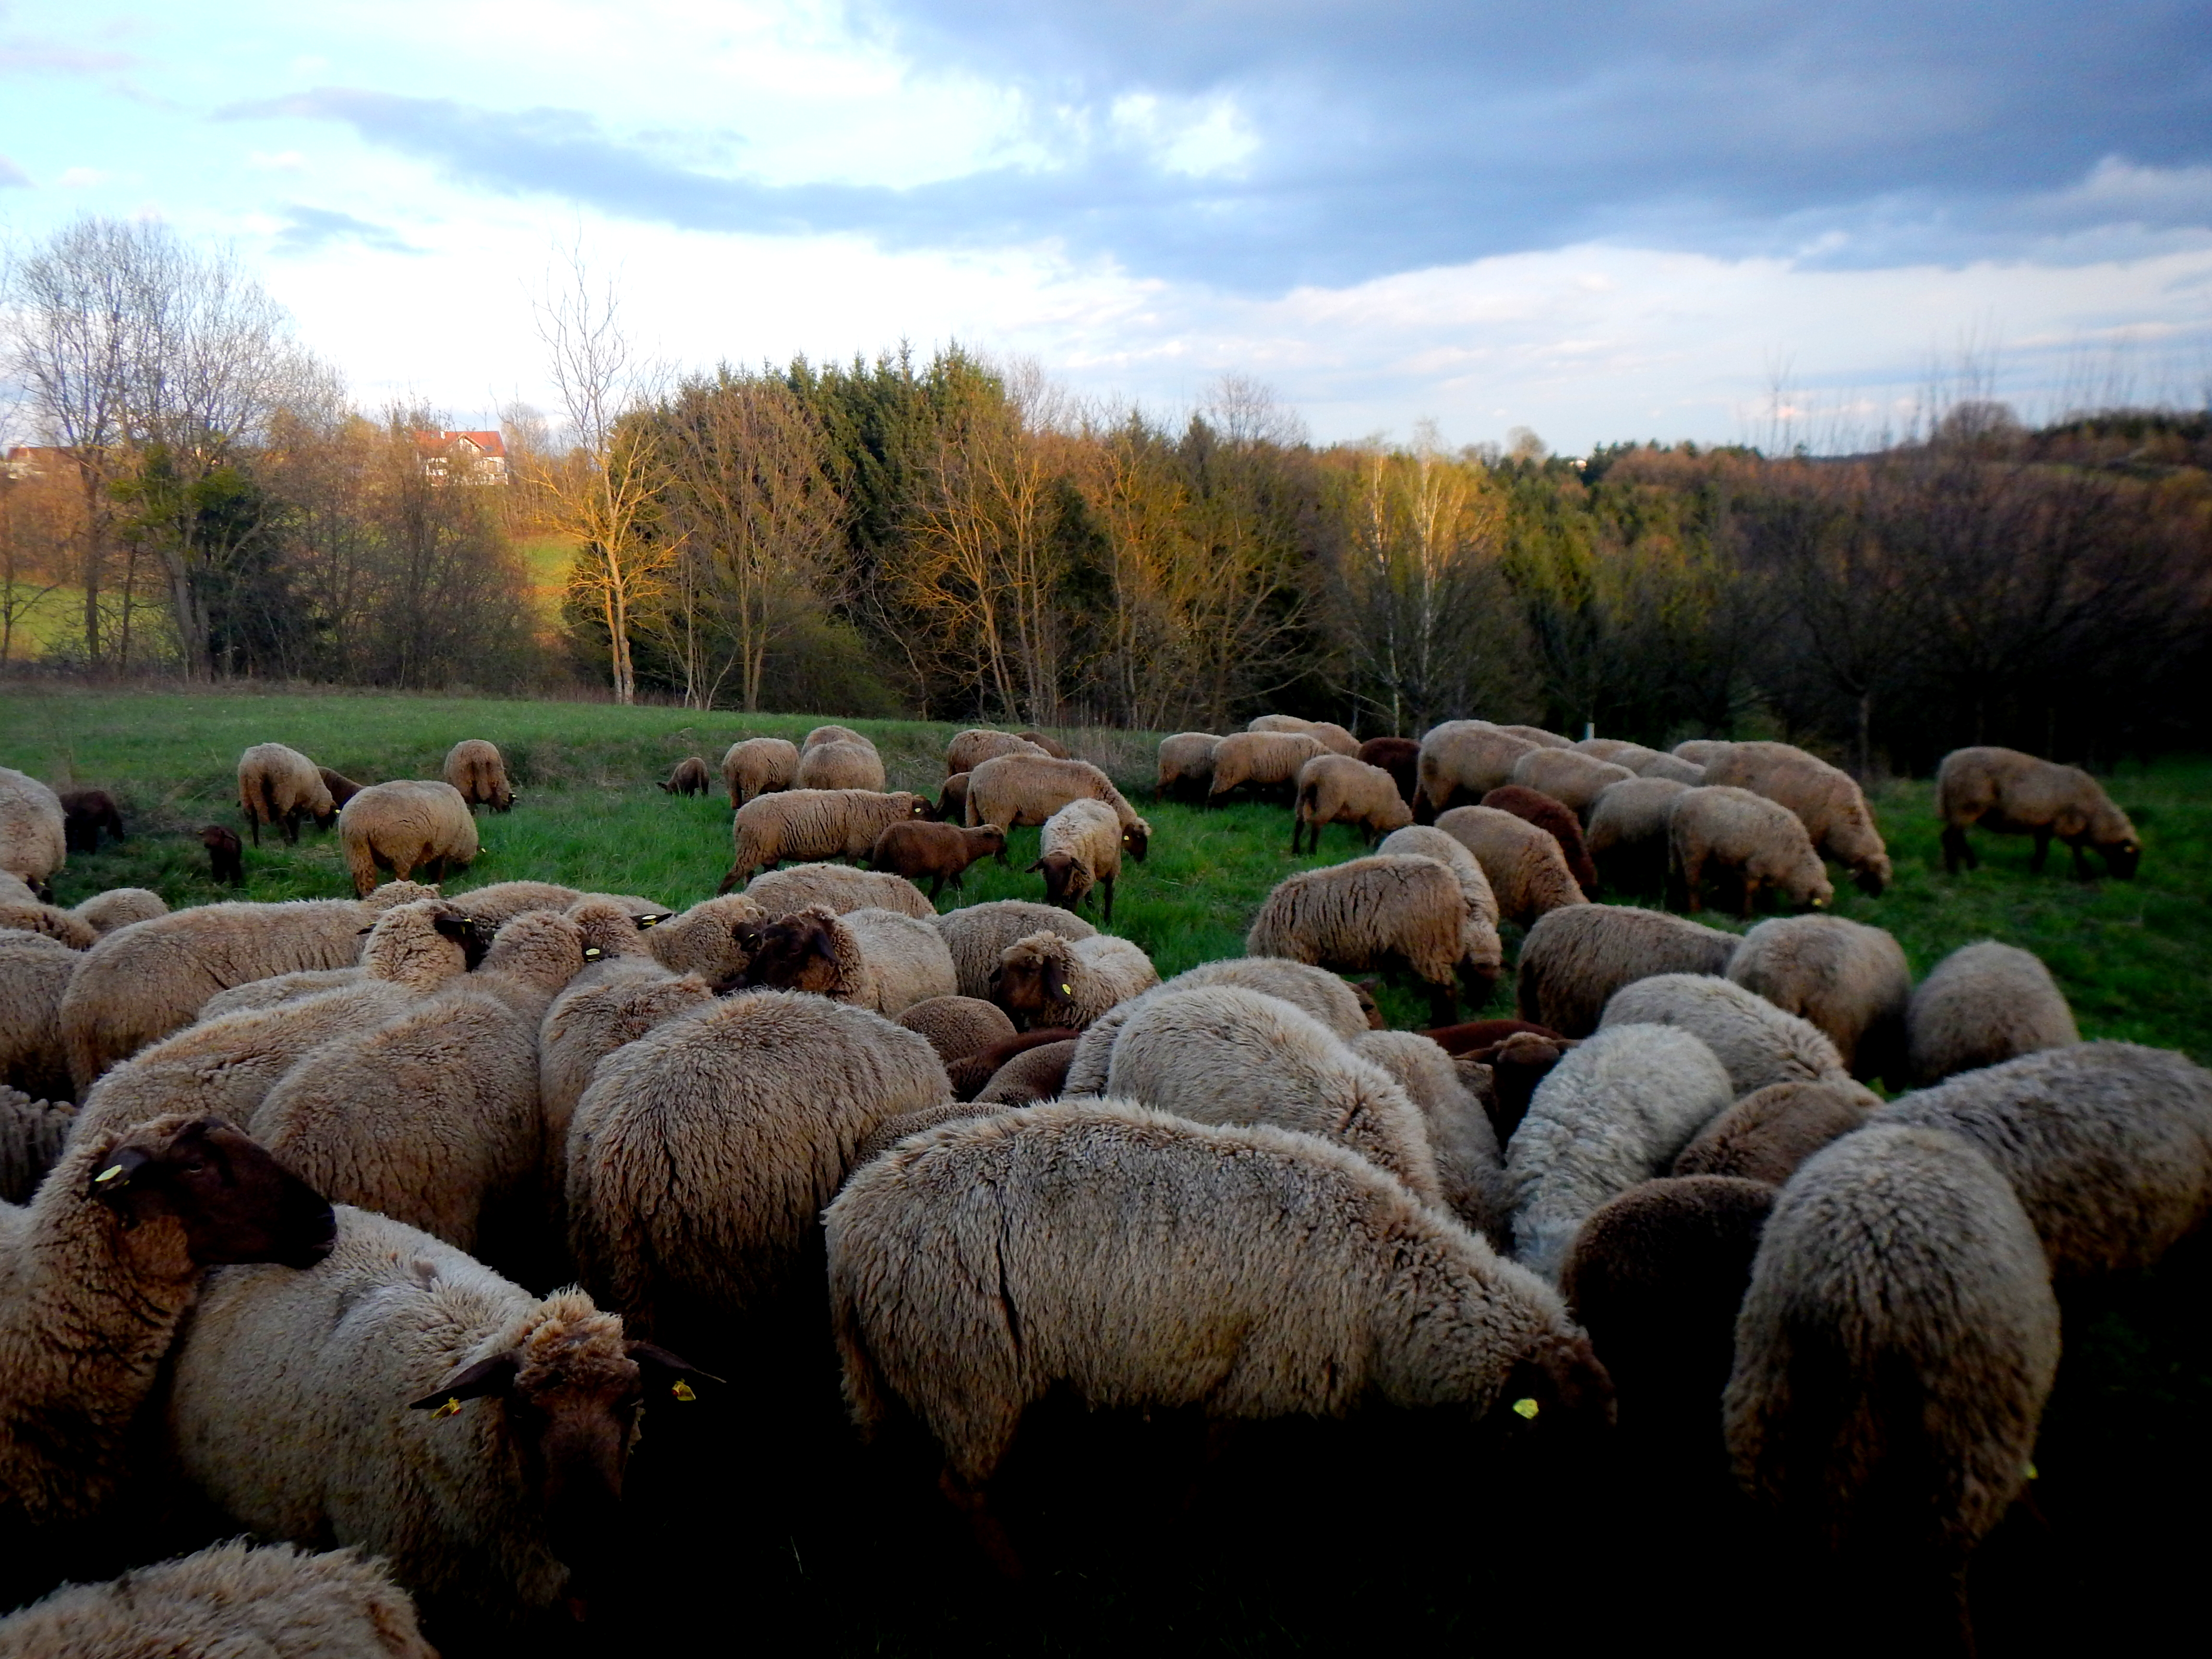 With the nomadic shepherds in Fürstenfeld, Austria